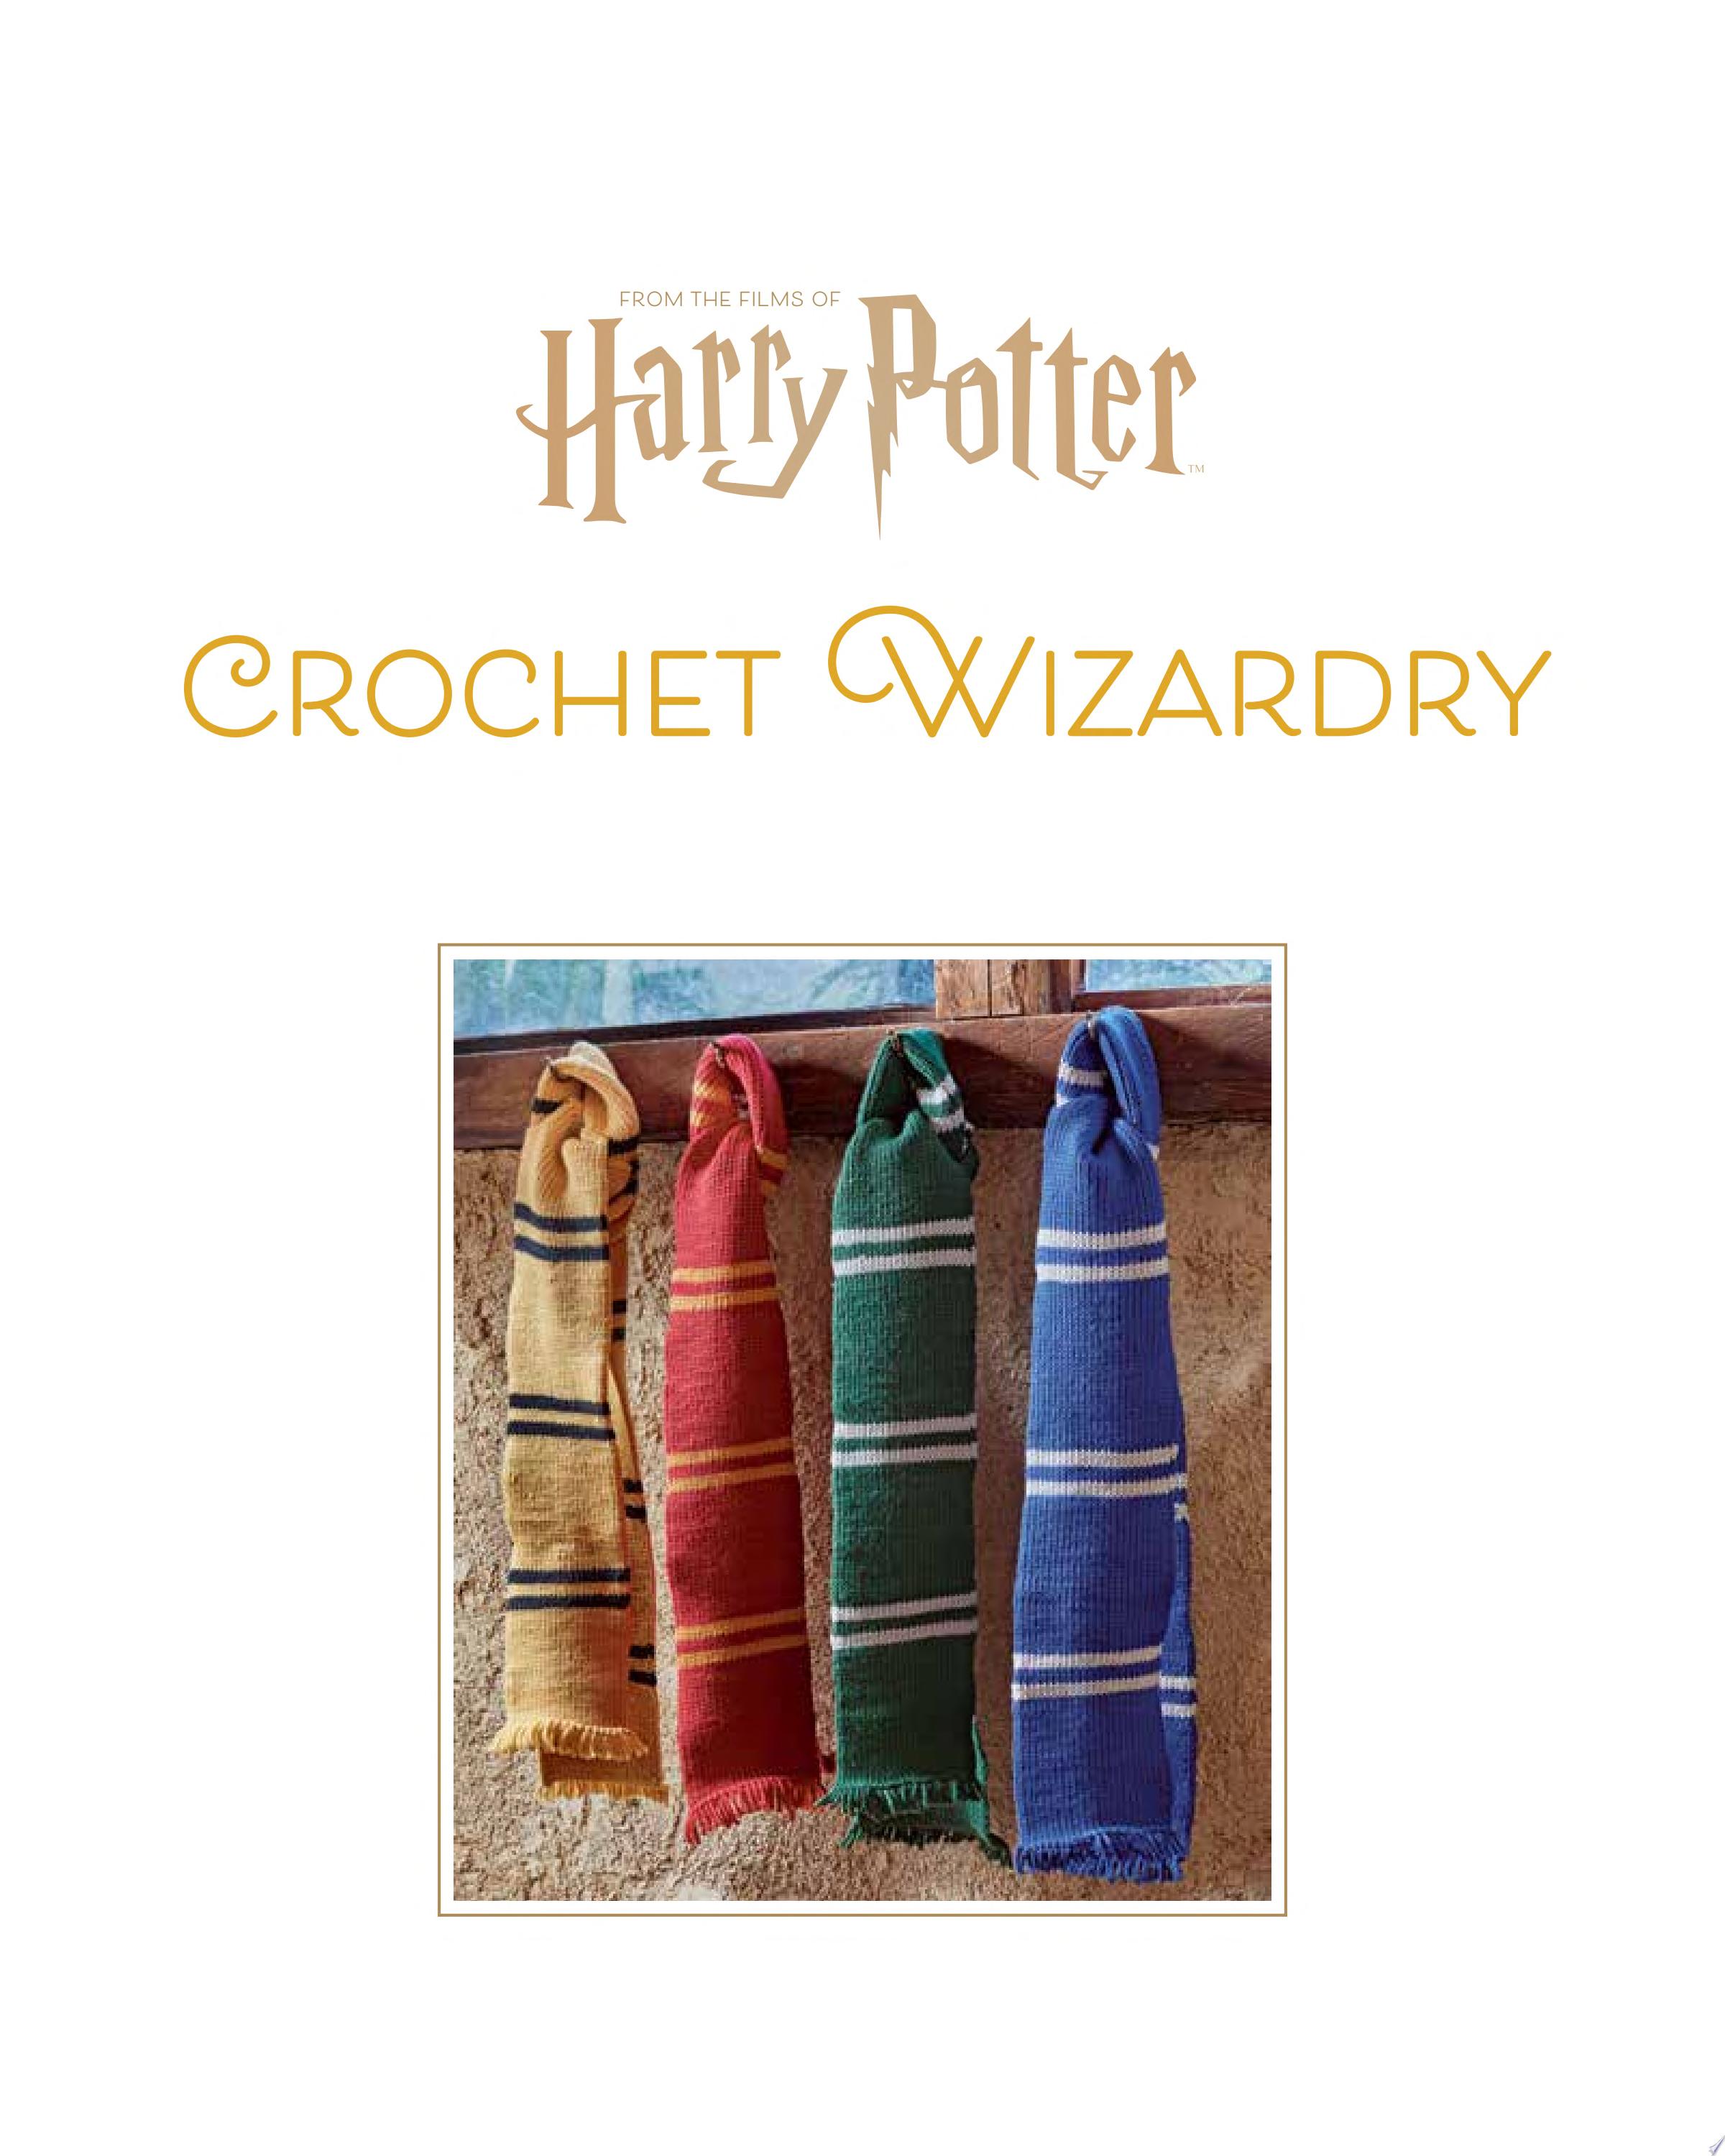 Image for "Harry Potter: Crochet Wizardry | Crochet Patterns | Harry Potter Crafts"